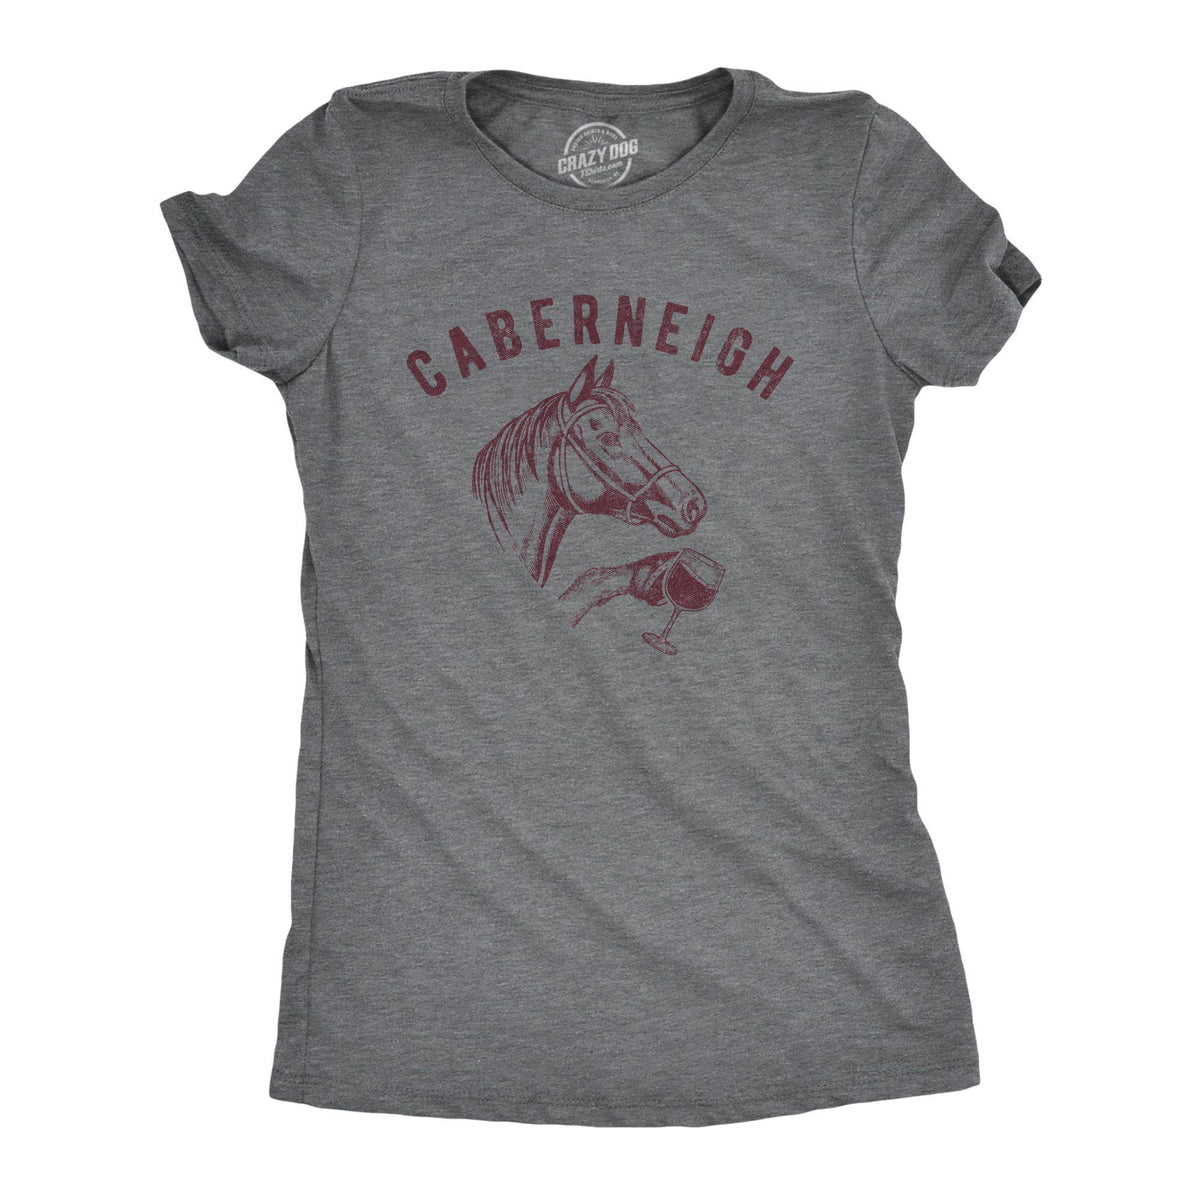 Caberneigh Women&#39;s Tshirt - Crazy Dog T-Shirts